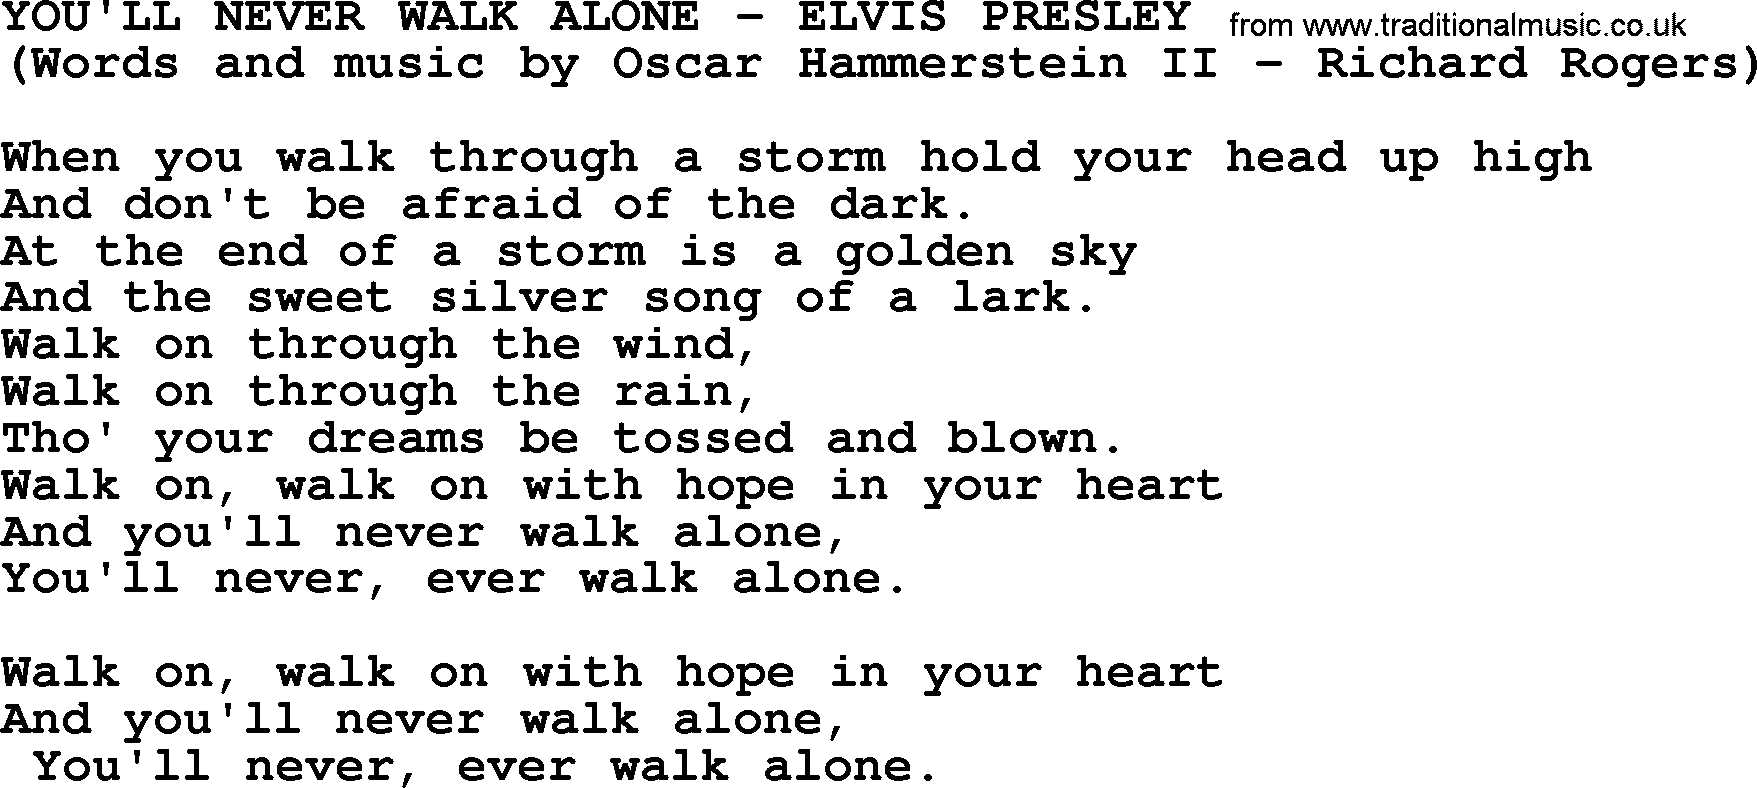 Elvis Presley song: You'll Never Walk Alone lyrics